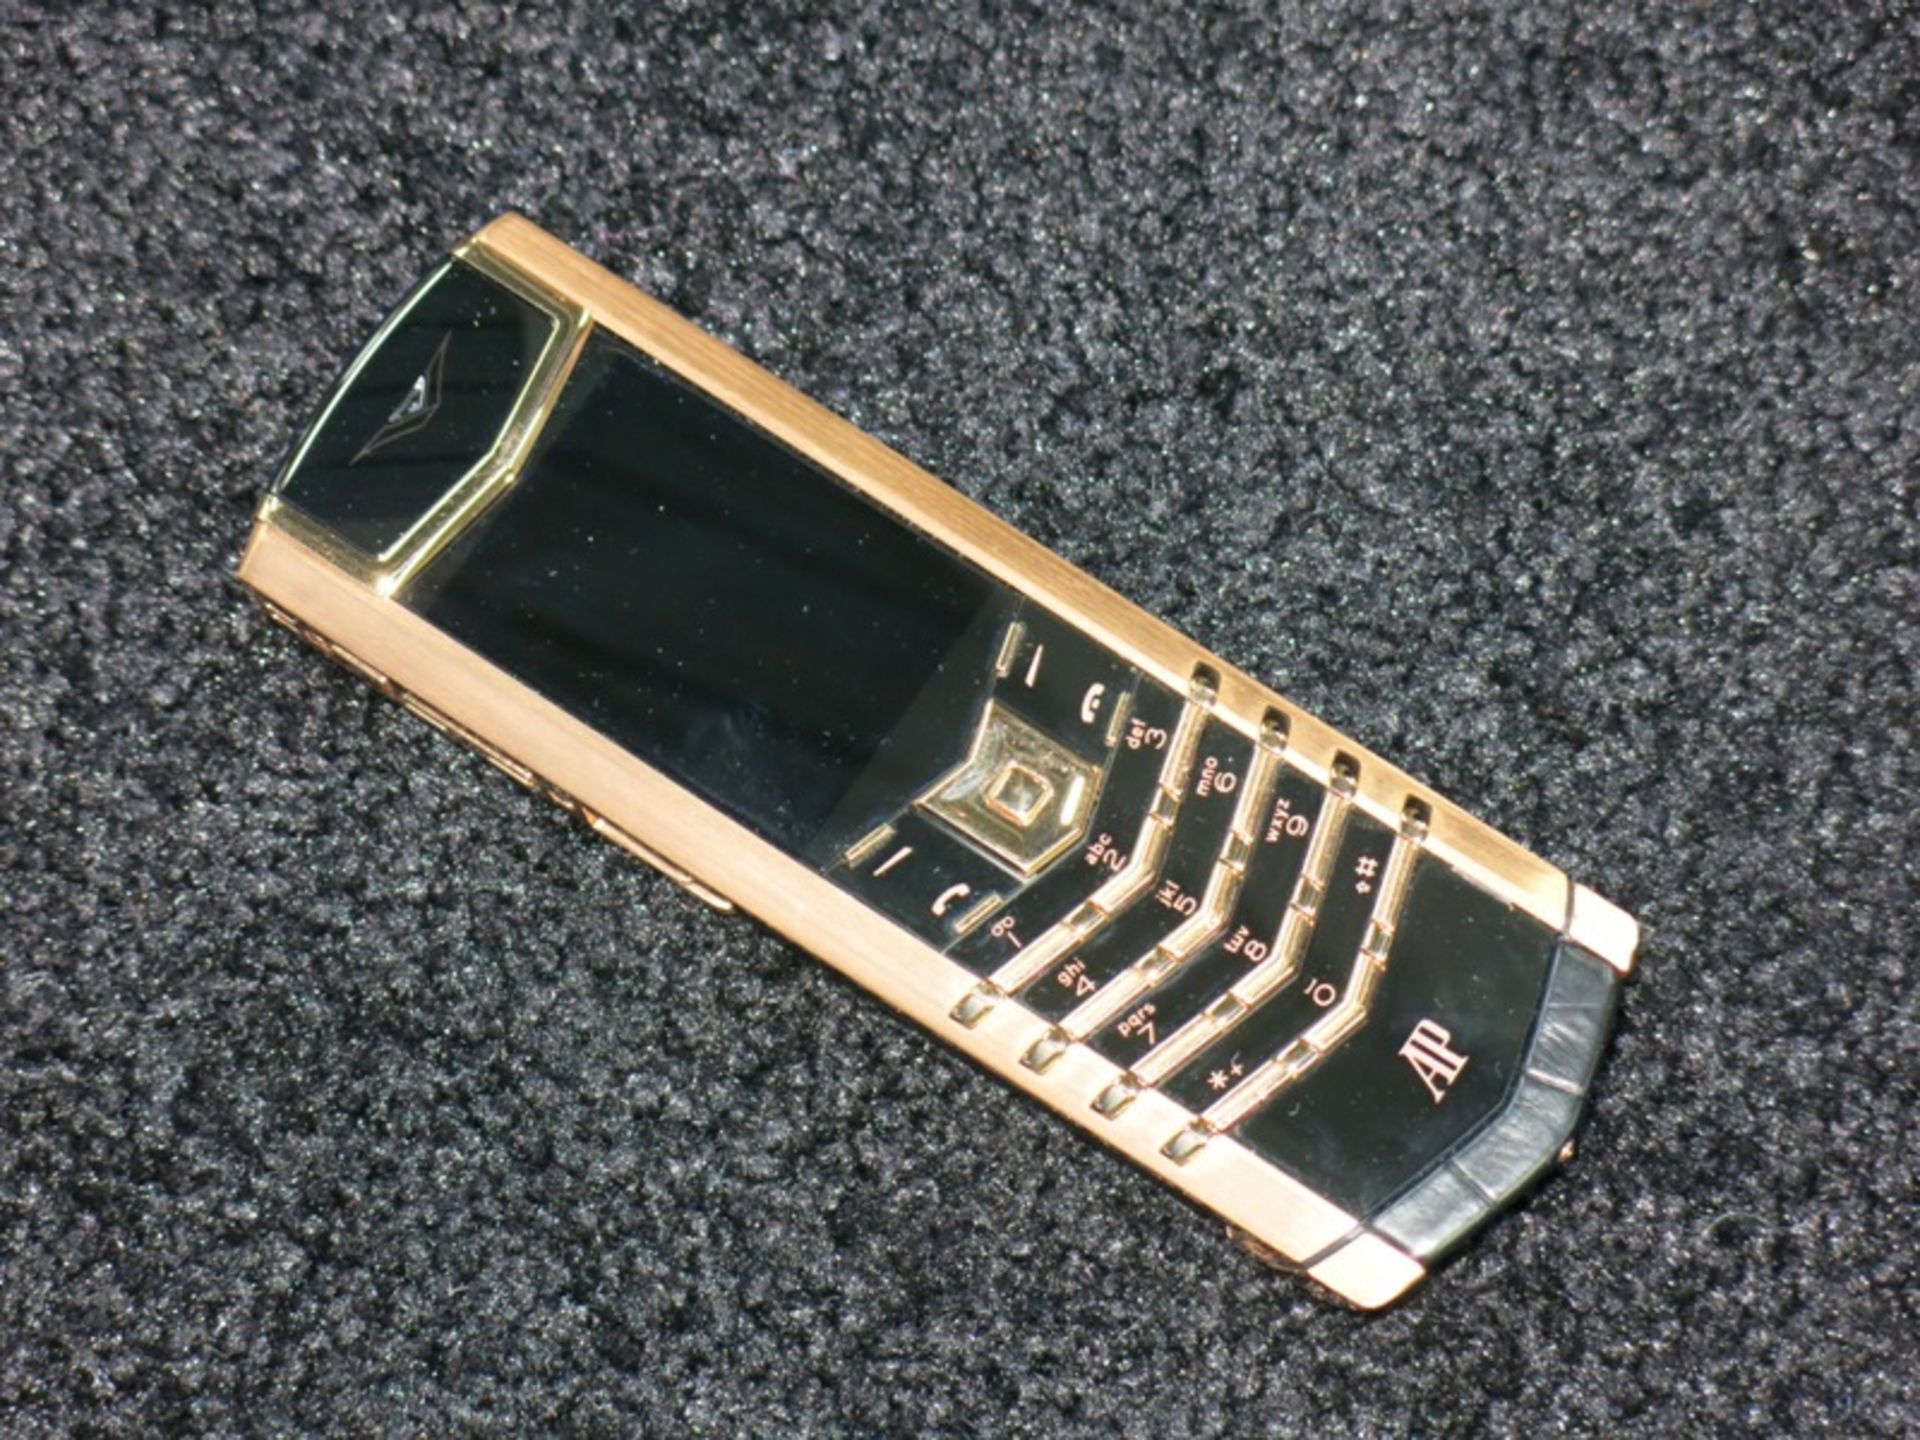 Vertu 18kt Brushed Red Gold Signature S Phone. Designed for AUDEMARS PIGUET Partnership with